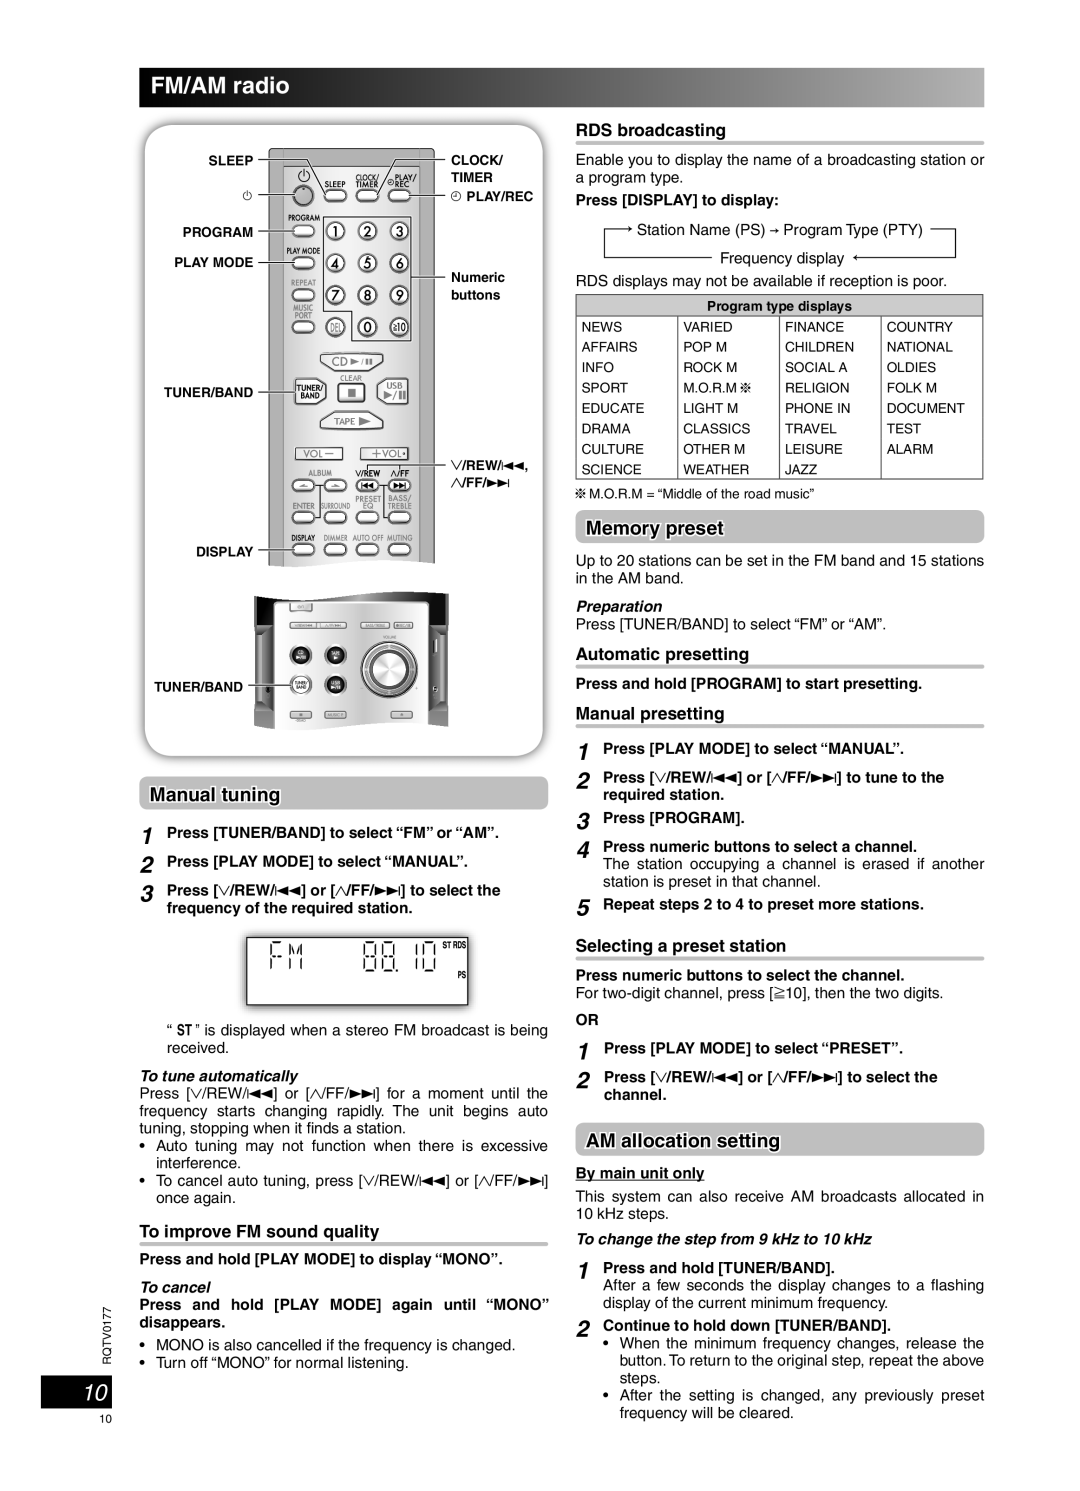 Panasonic SC-PM45 FM/AM radio, Manual tuning, Memory preset, AM allocation setting, RDS broadcasting, Automatic presetting 